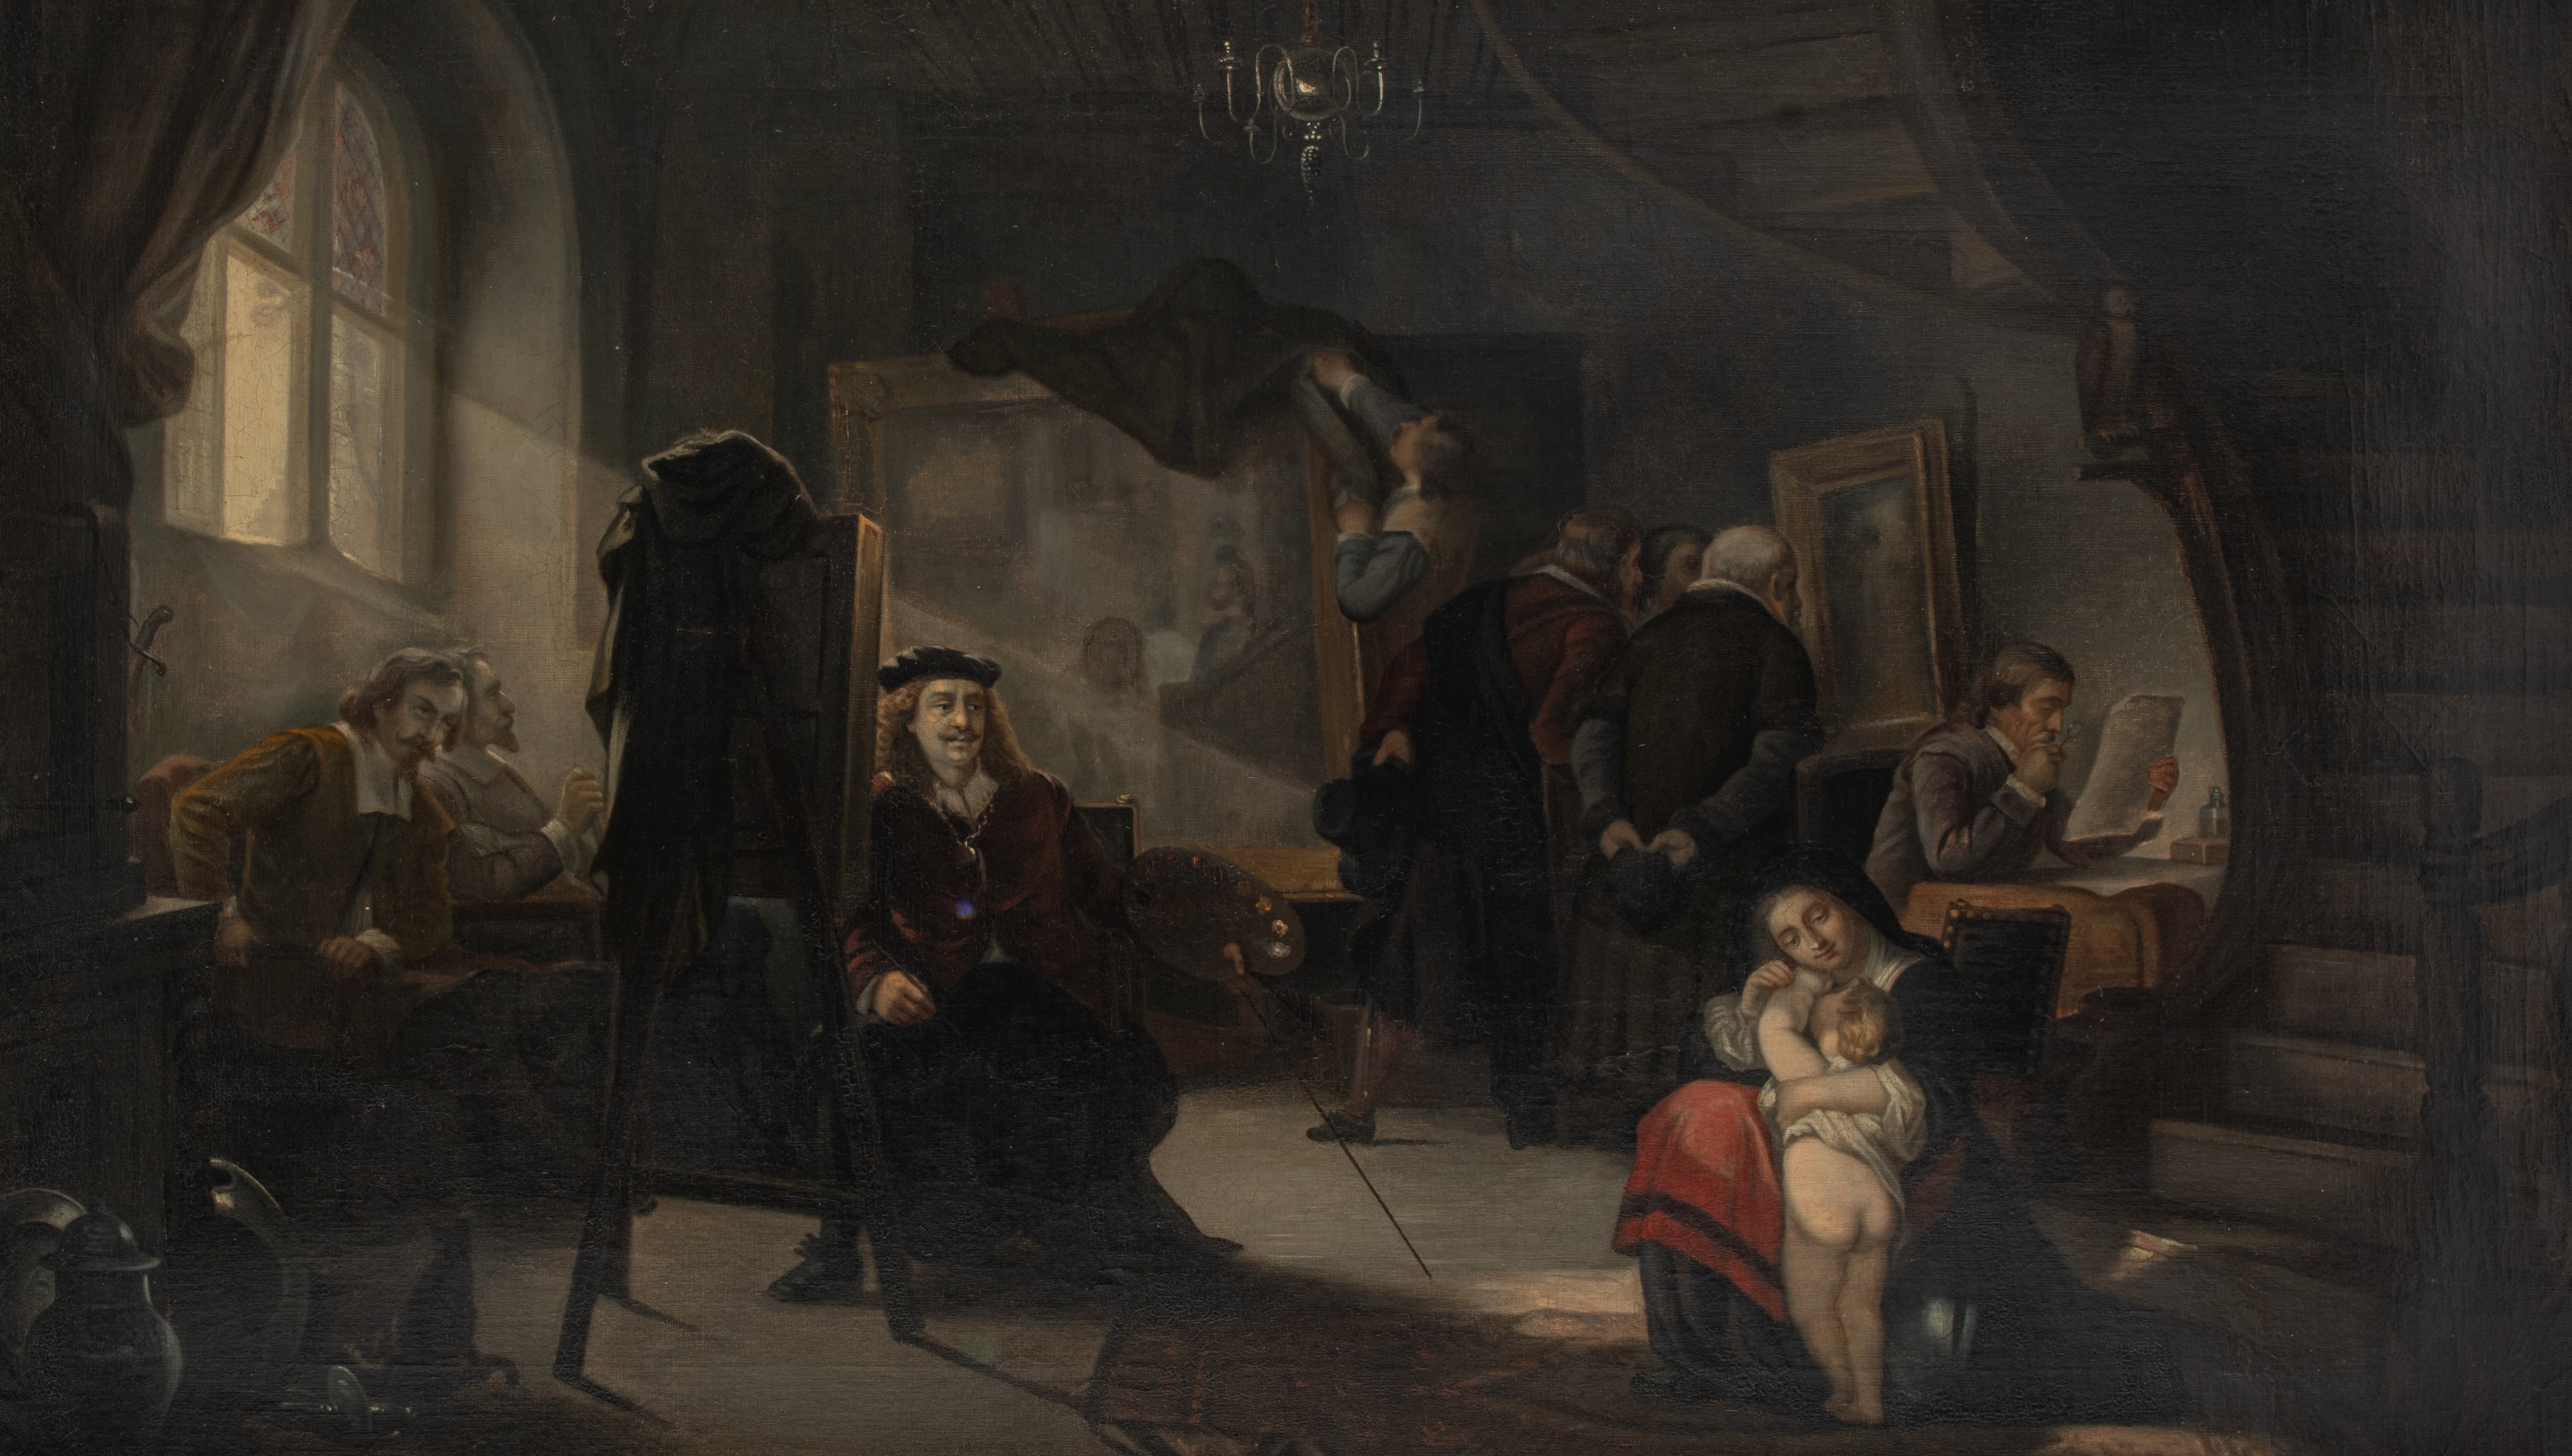 Rembrandt van Rijn creating another masterpiece in his workshop, 19thC, oil on canvas, 84 x 145 cm